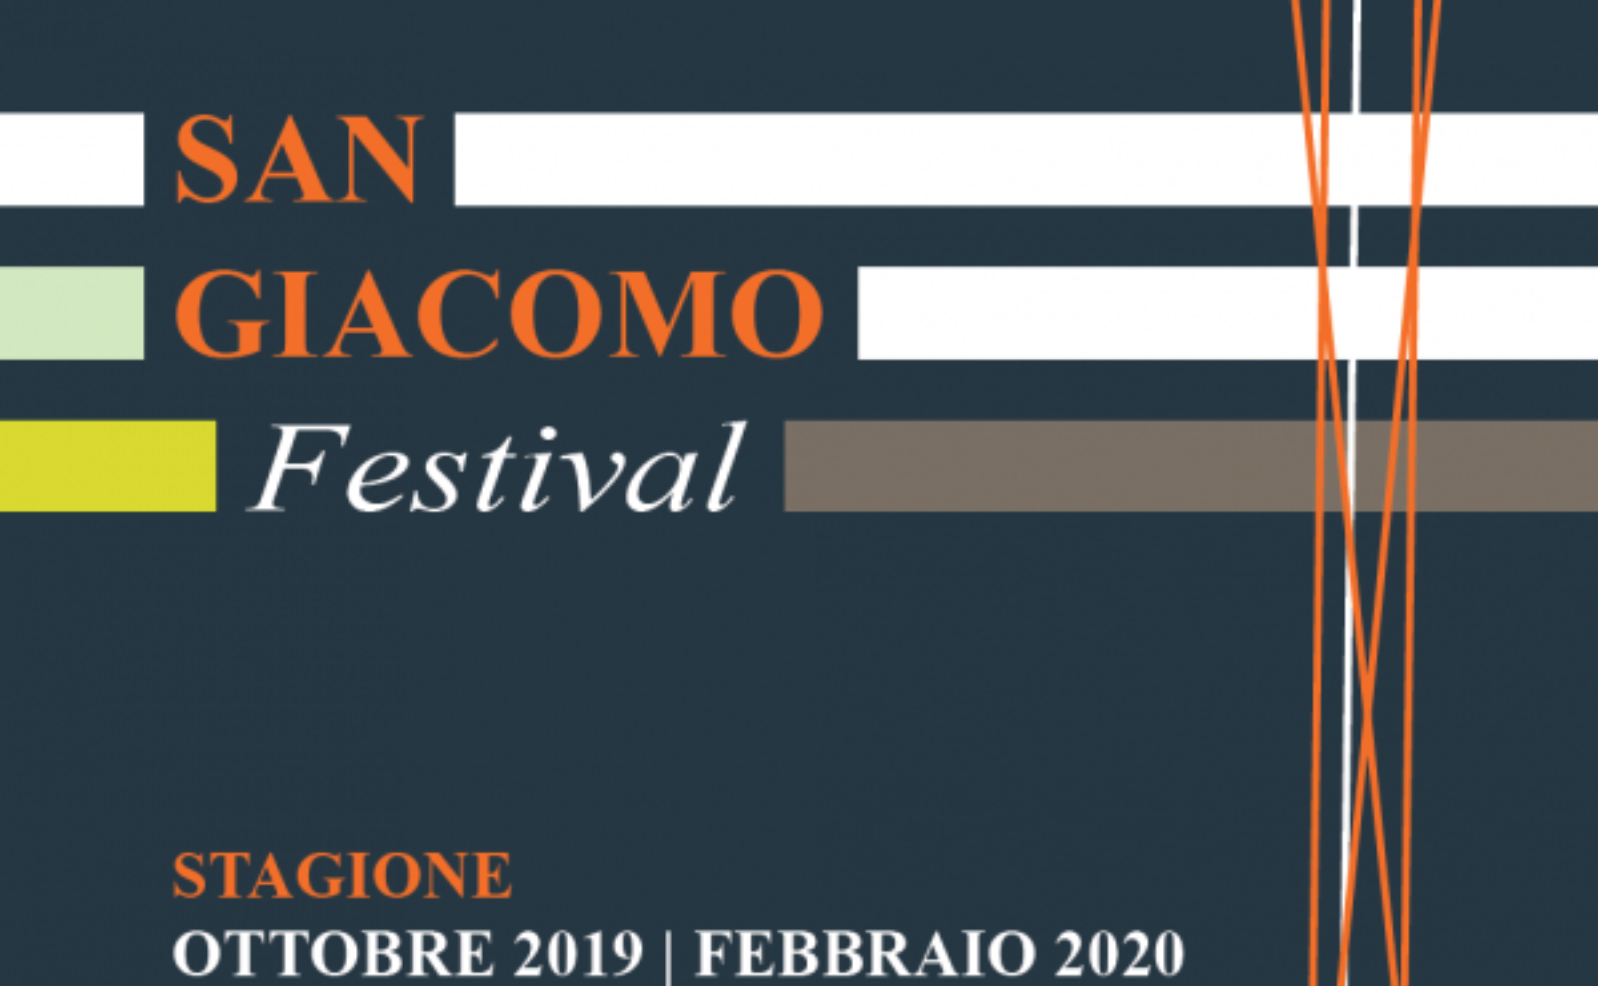 San Giacomo Festival: January - February